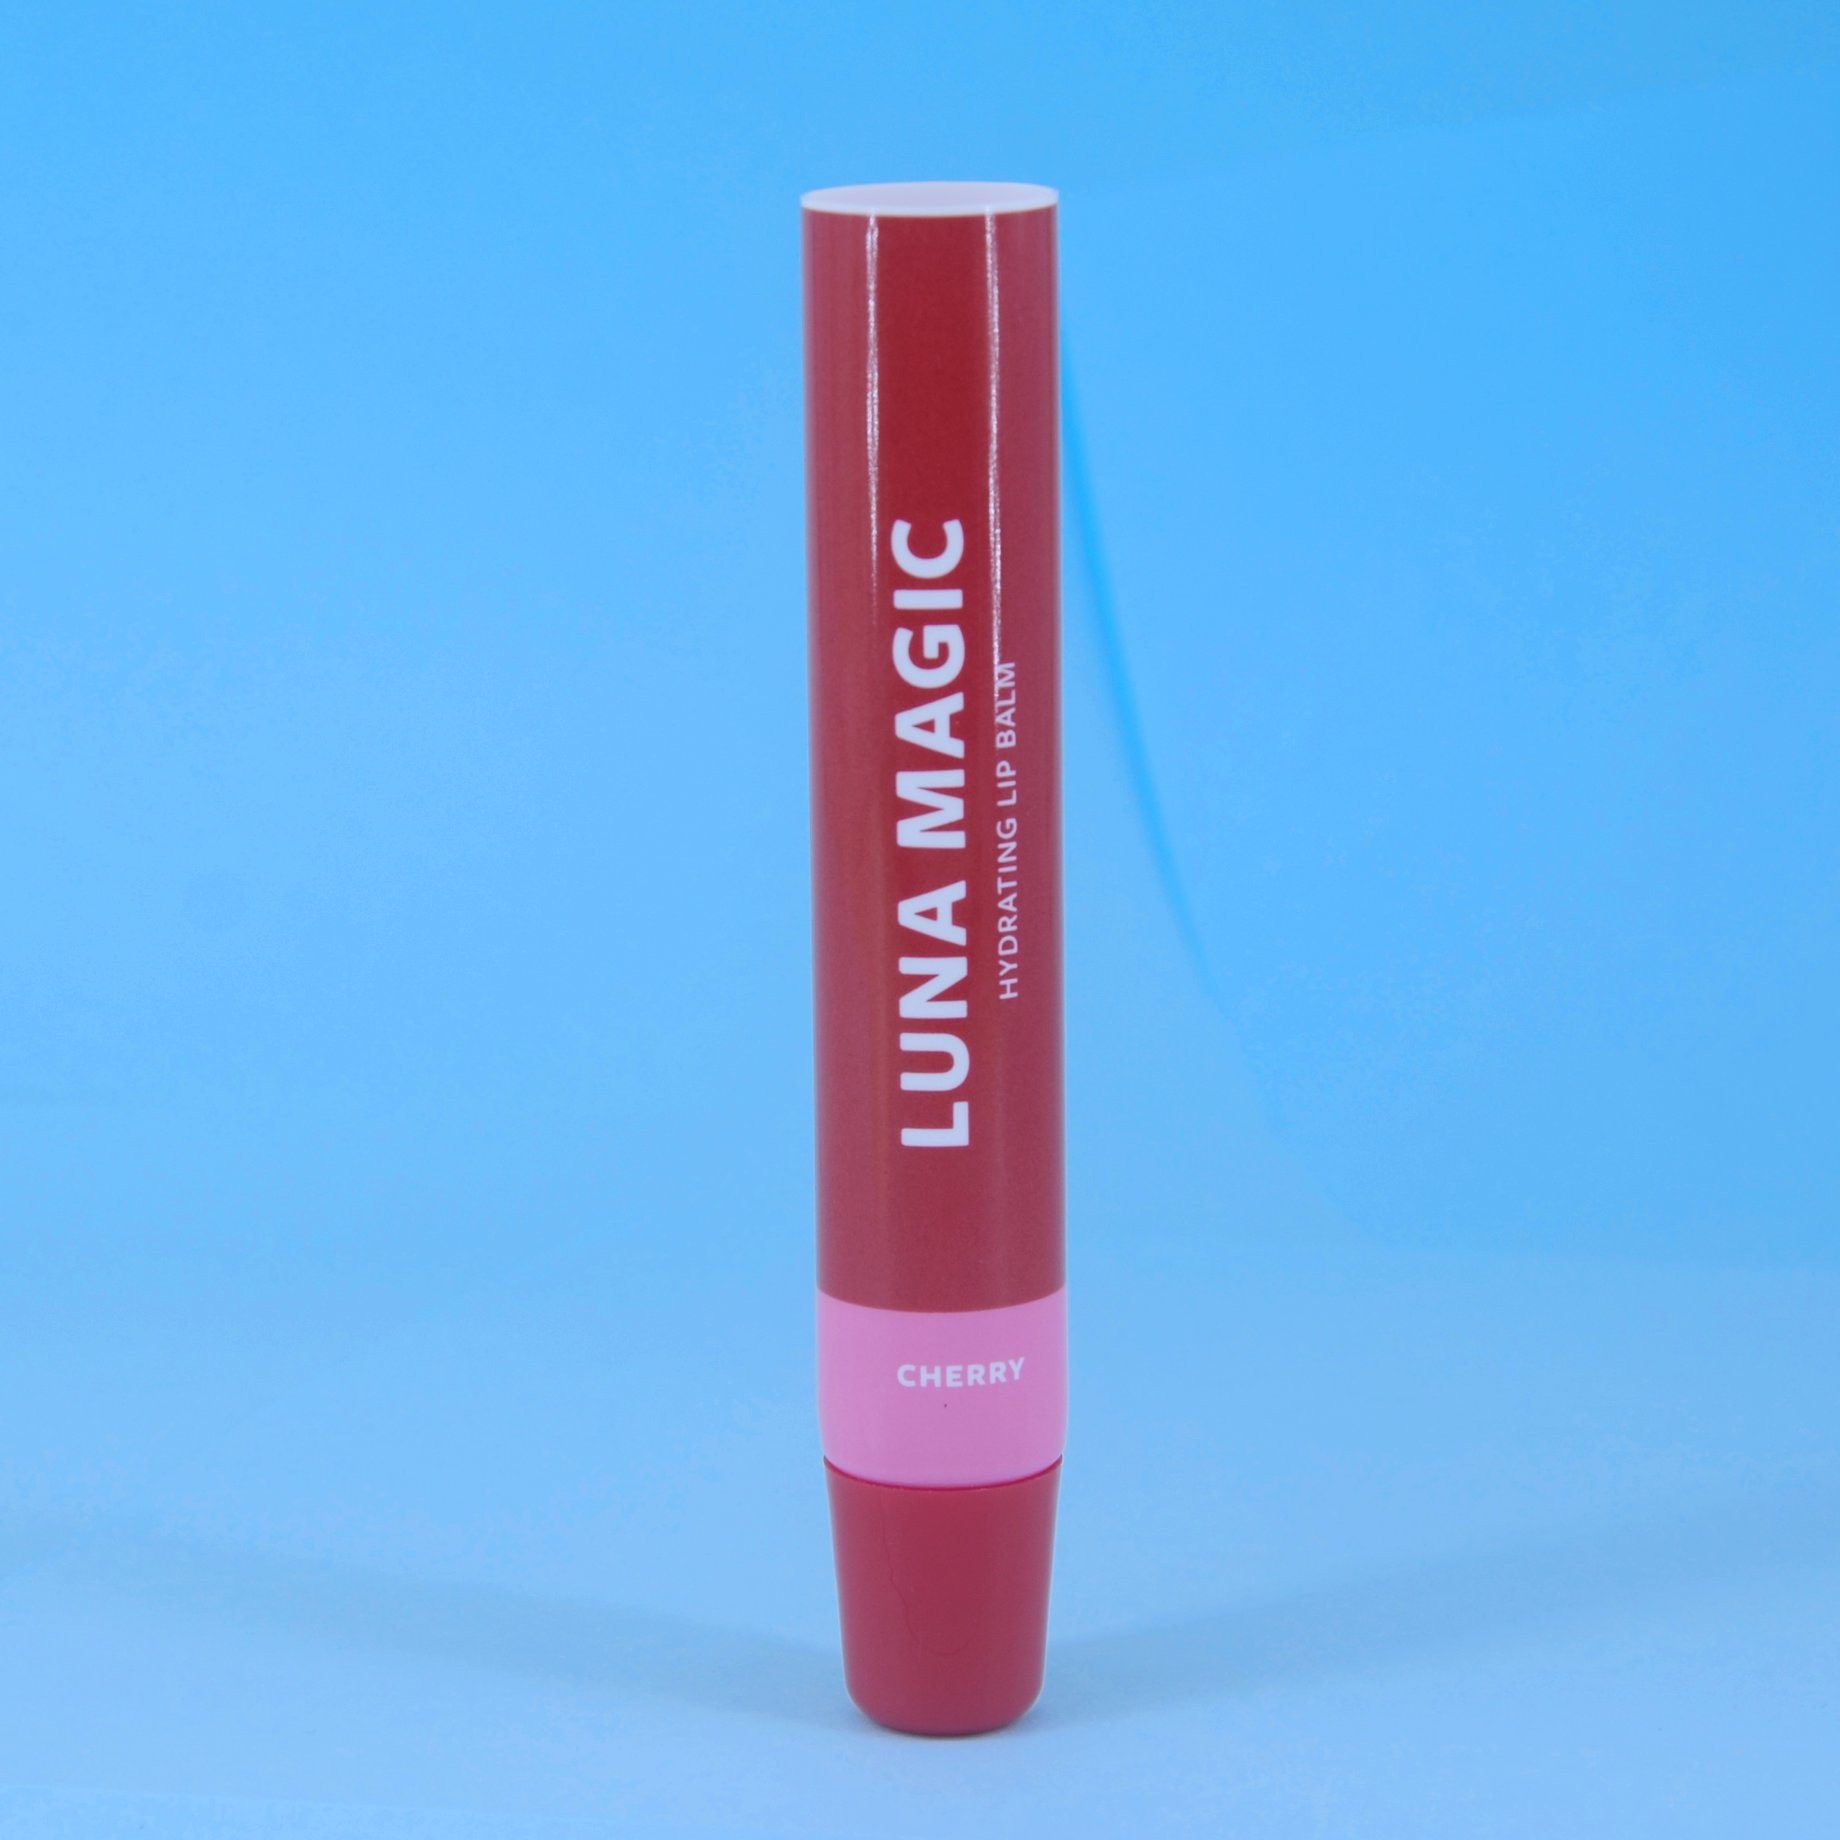 Wholesale Custom Empty Lip Oil Packaging Free Sample Environmental Friendly Sugarcane Silicone Liquid Lipstick Tube Round Tubes